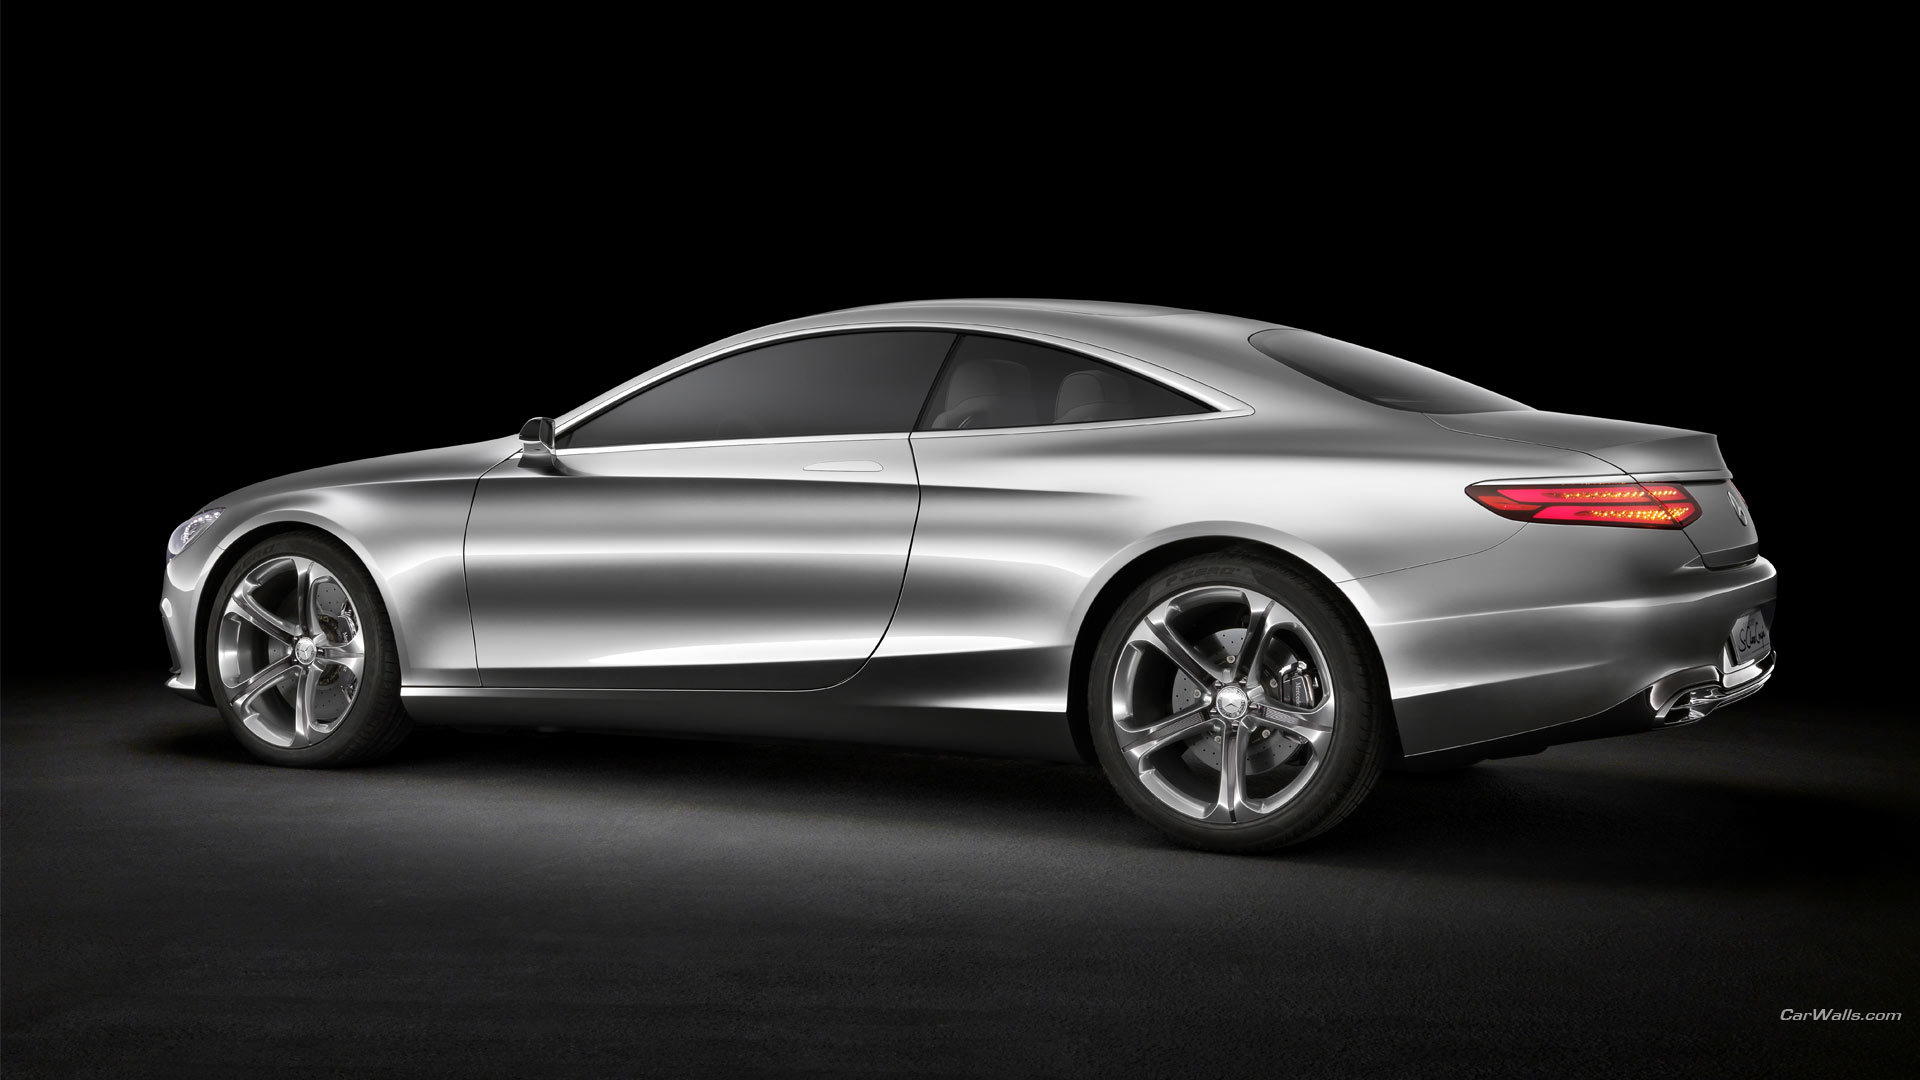 High resolution Mercedes-Benz S-Class Coupe full hd 1080p wallpaper ID:21712 for desktop